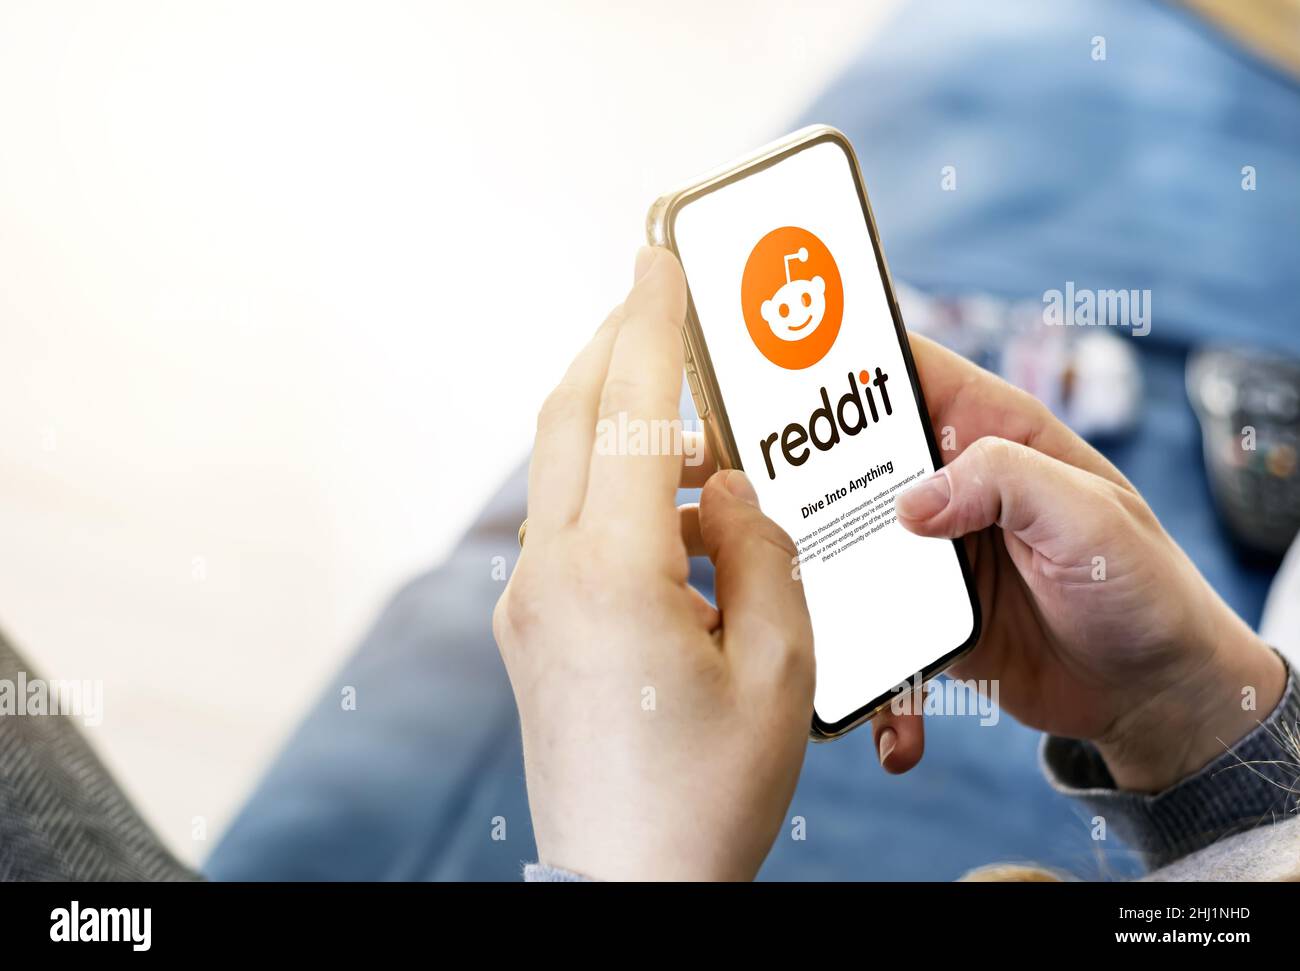 Where can I download the official Reddit mobile app? – Reddit Help